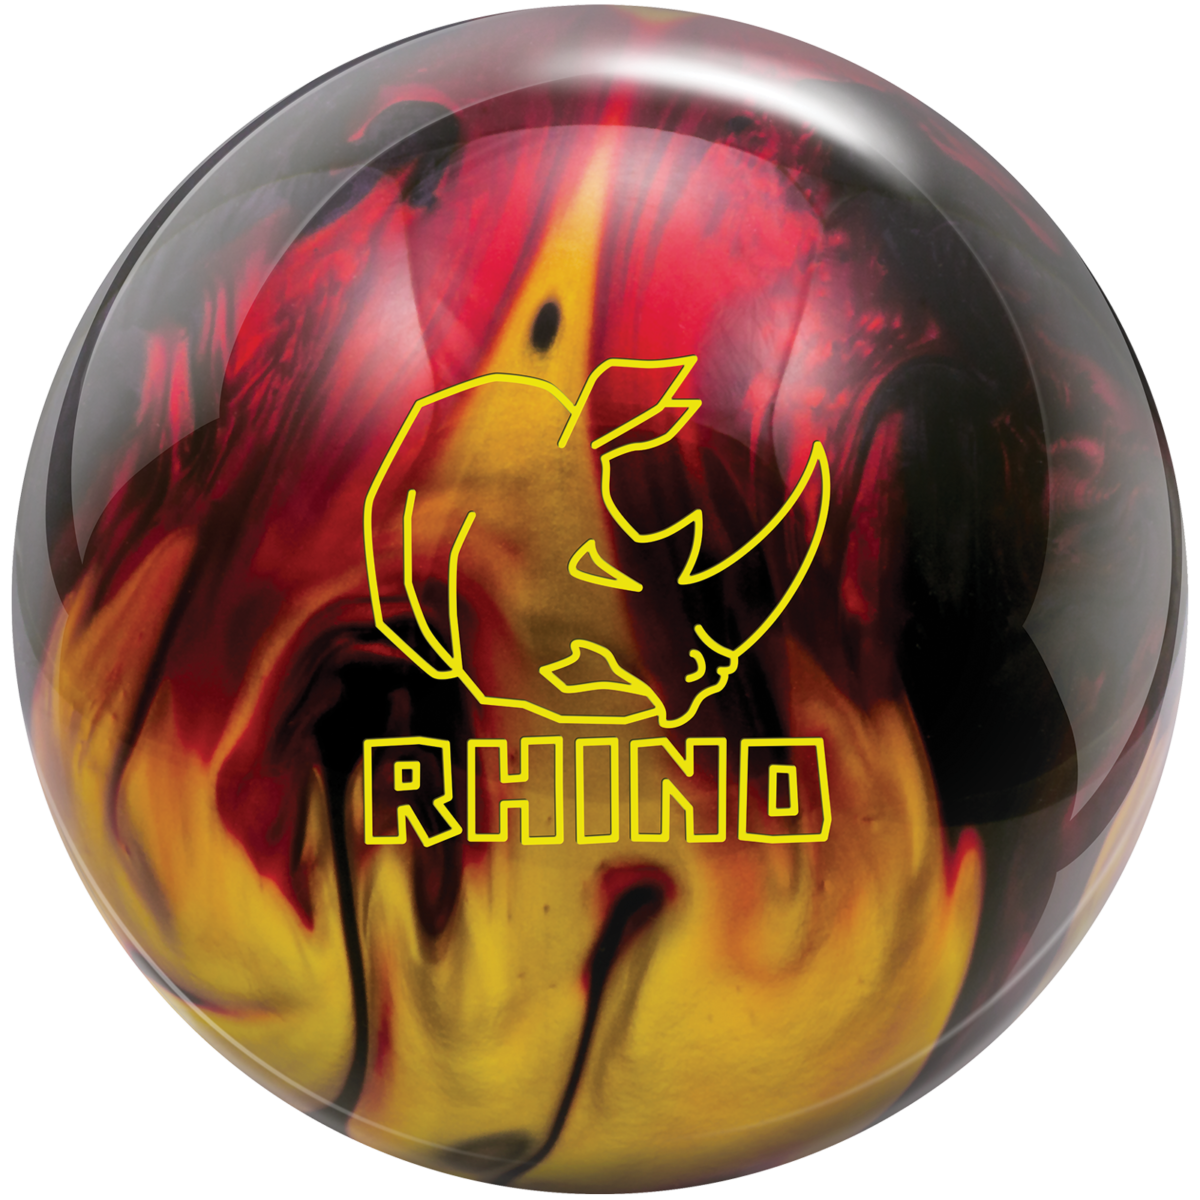 14lb Brunswick Rhino Black Pearl Reactive Bowling Ball for sale online 